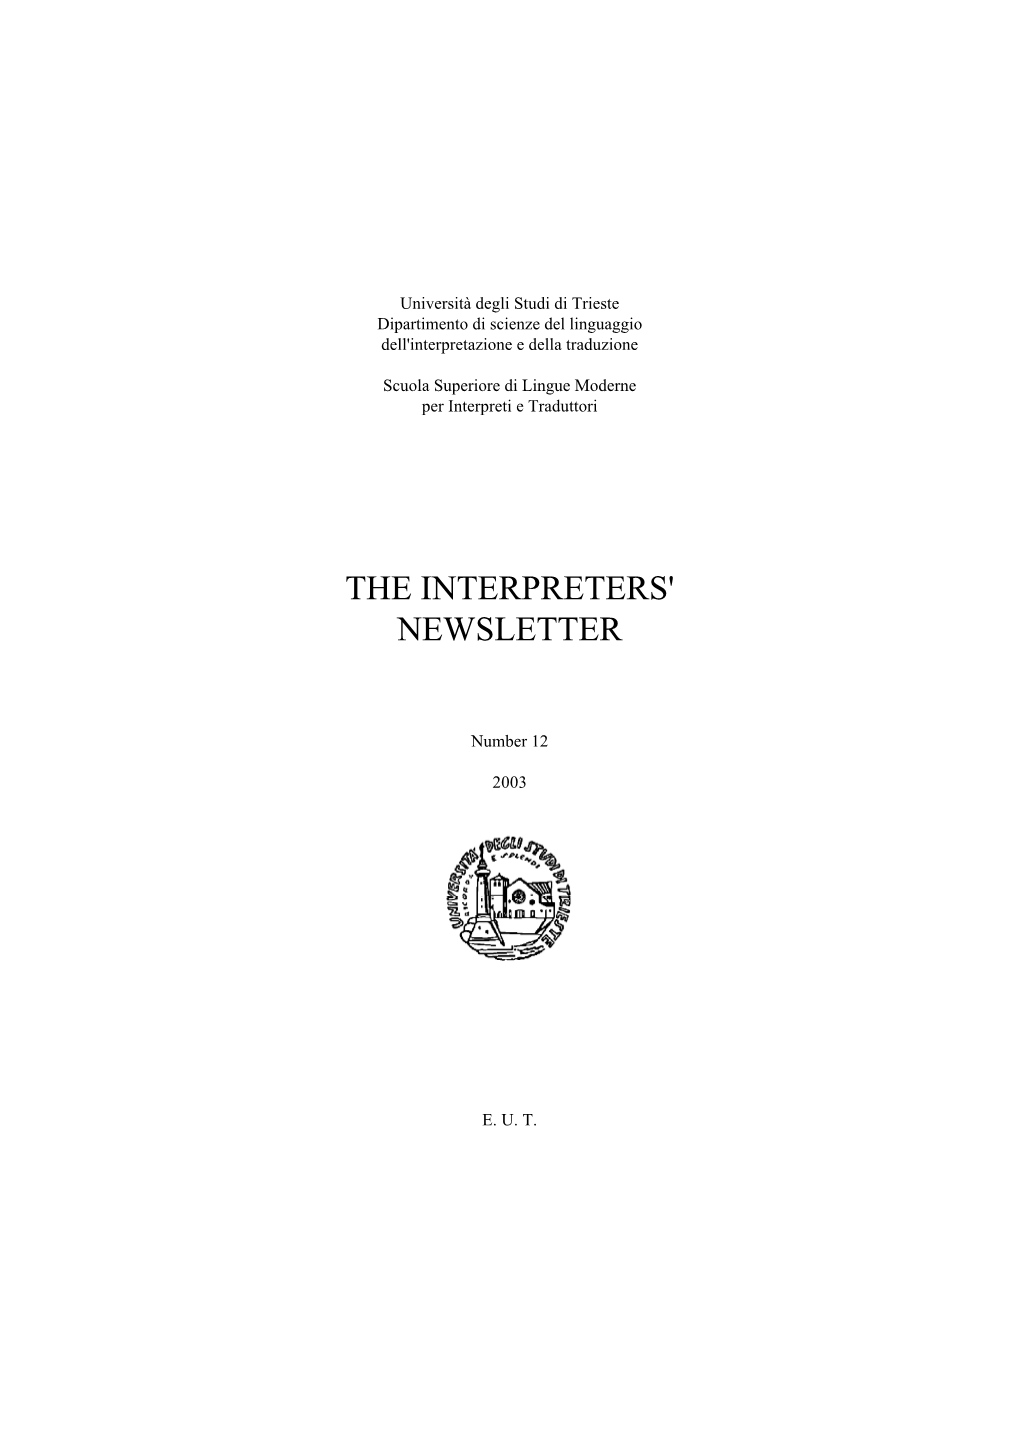 The Interpreters' Newsletter